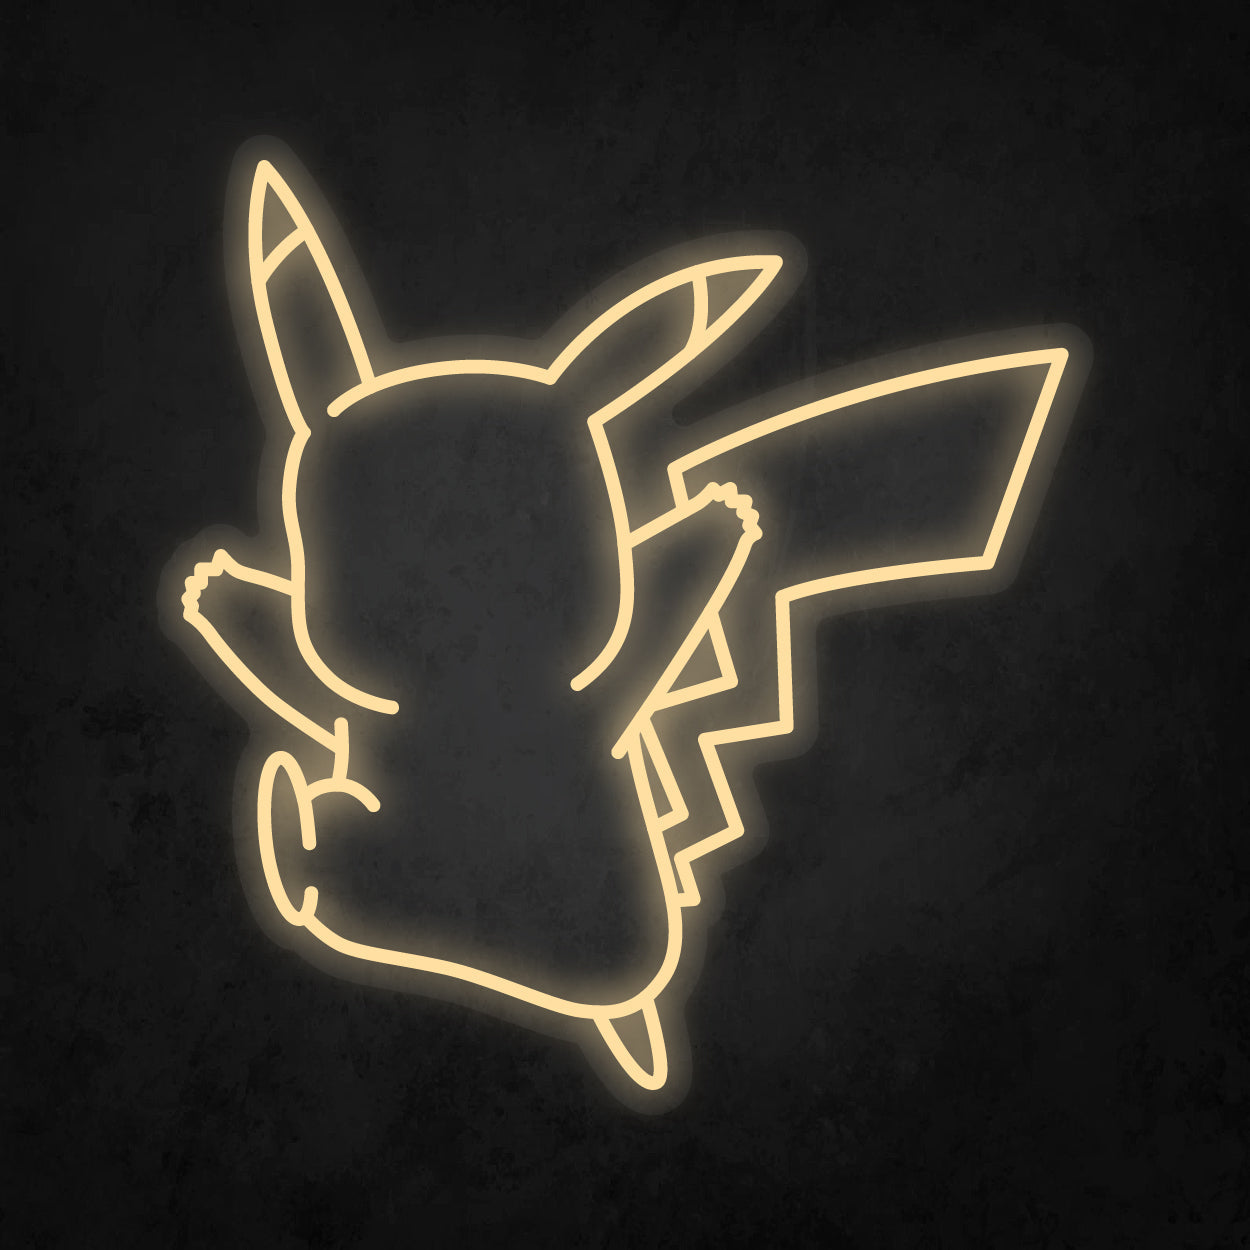 LED Neon Sign - Pokemon Pikachu